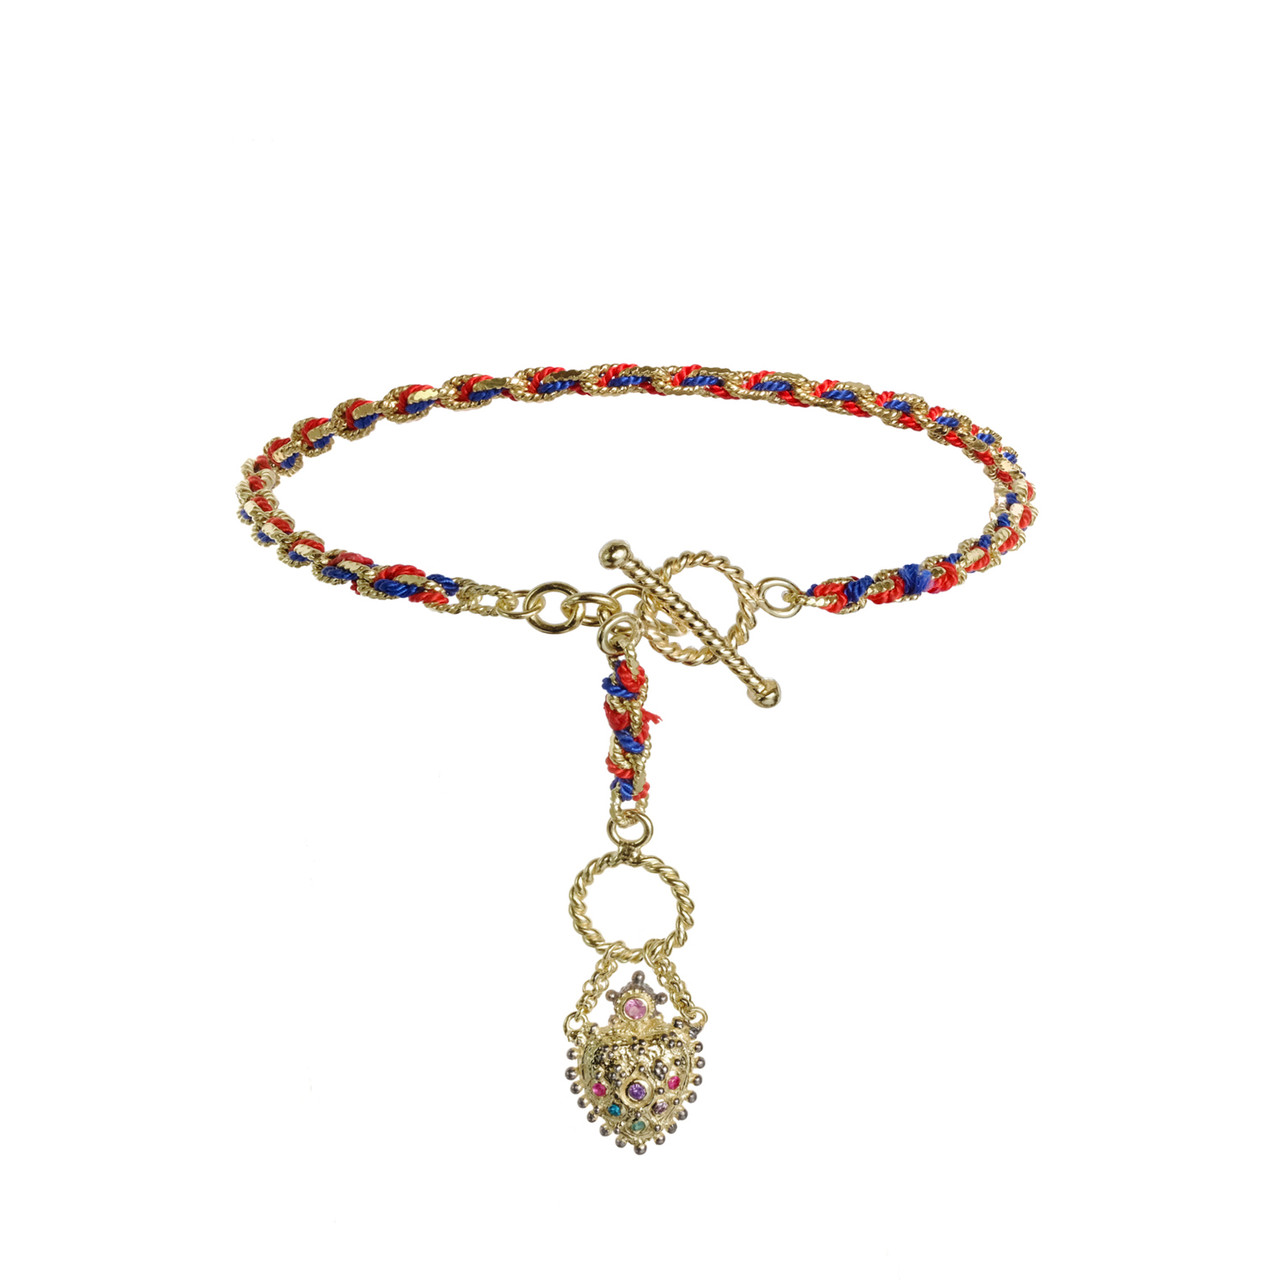 N° 839 Gold & Braided Silk Heart Bracelet, Marie Laure Chamorel, tomfoolery